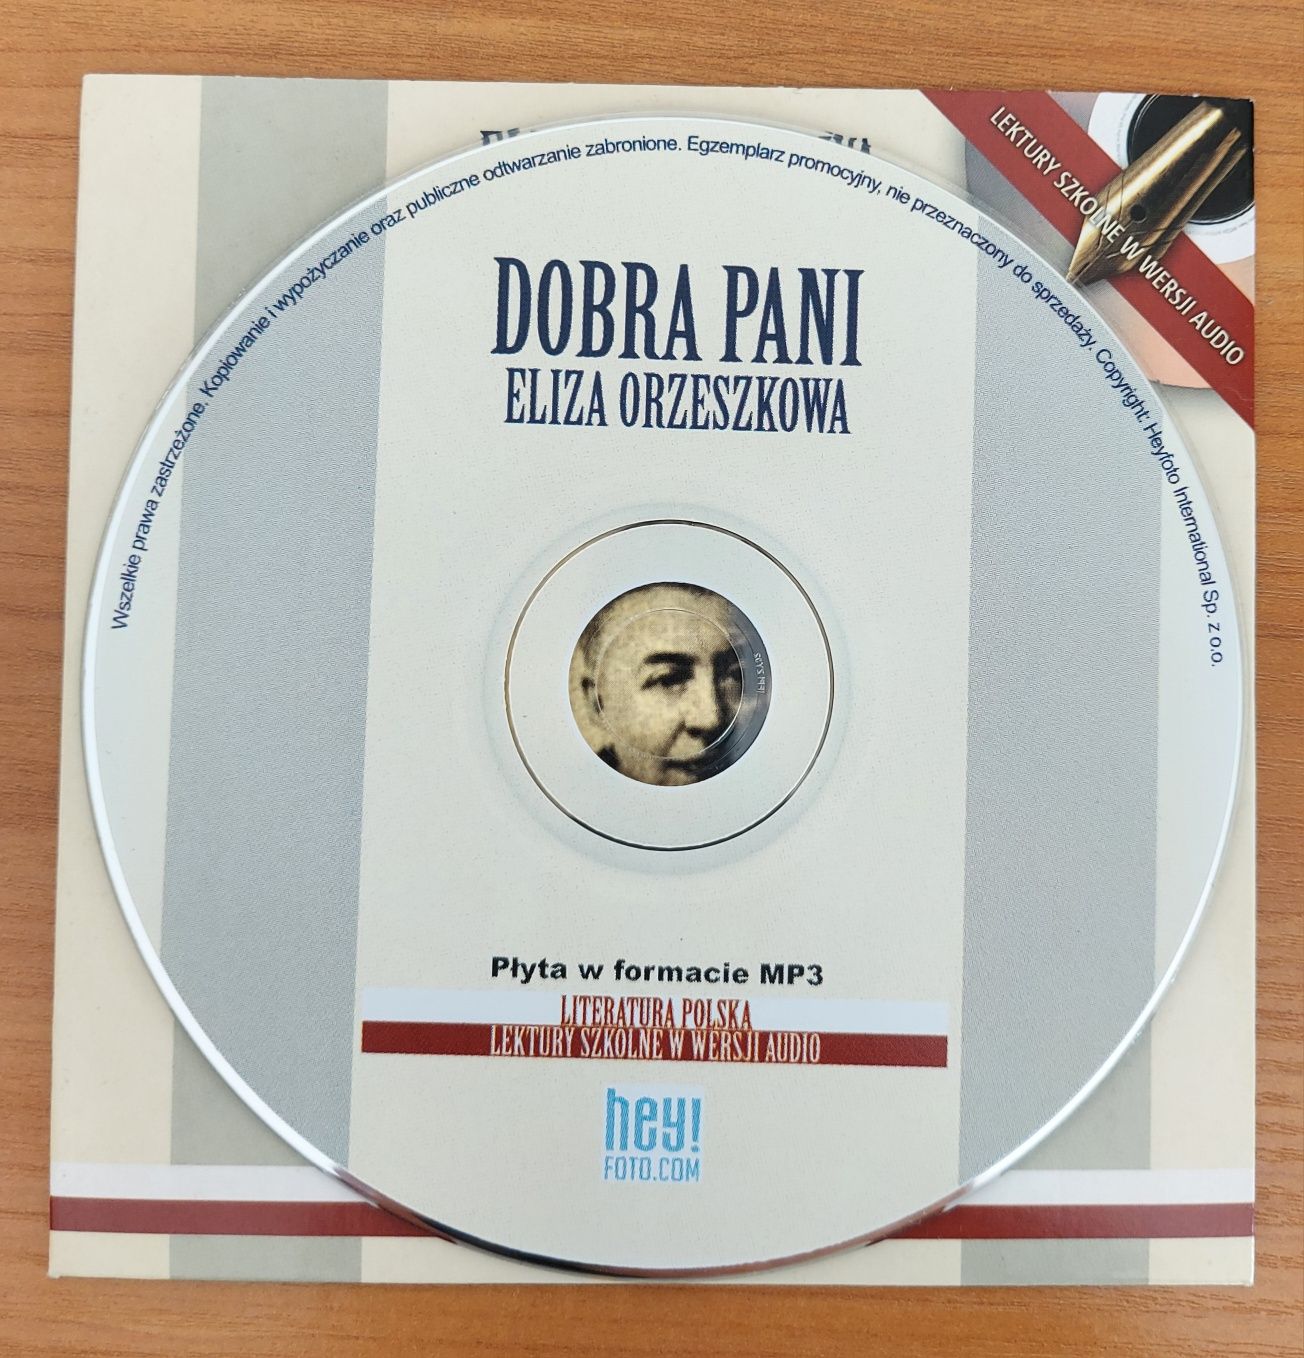 Eliza Orzeszkowa "Dobra pani" CD mp3 audiobook lektura